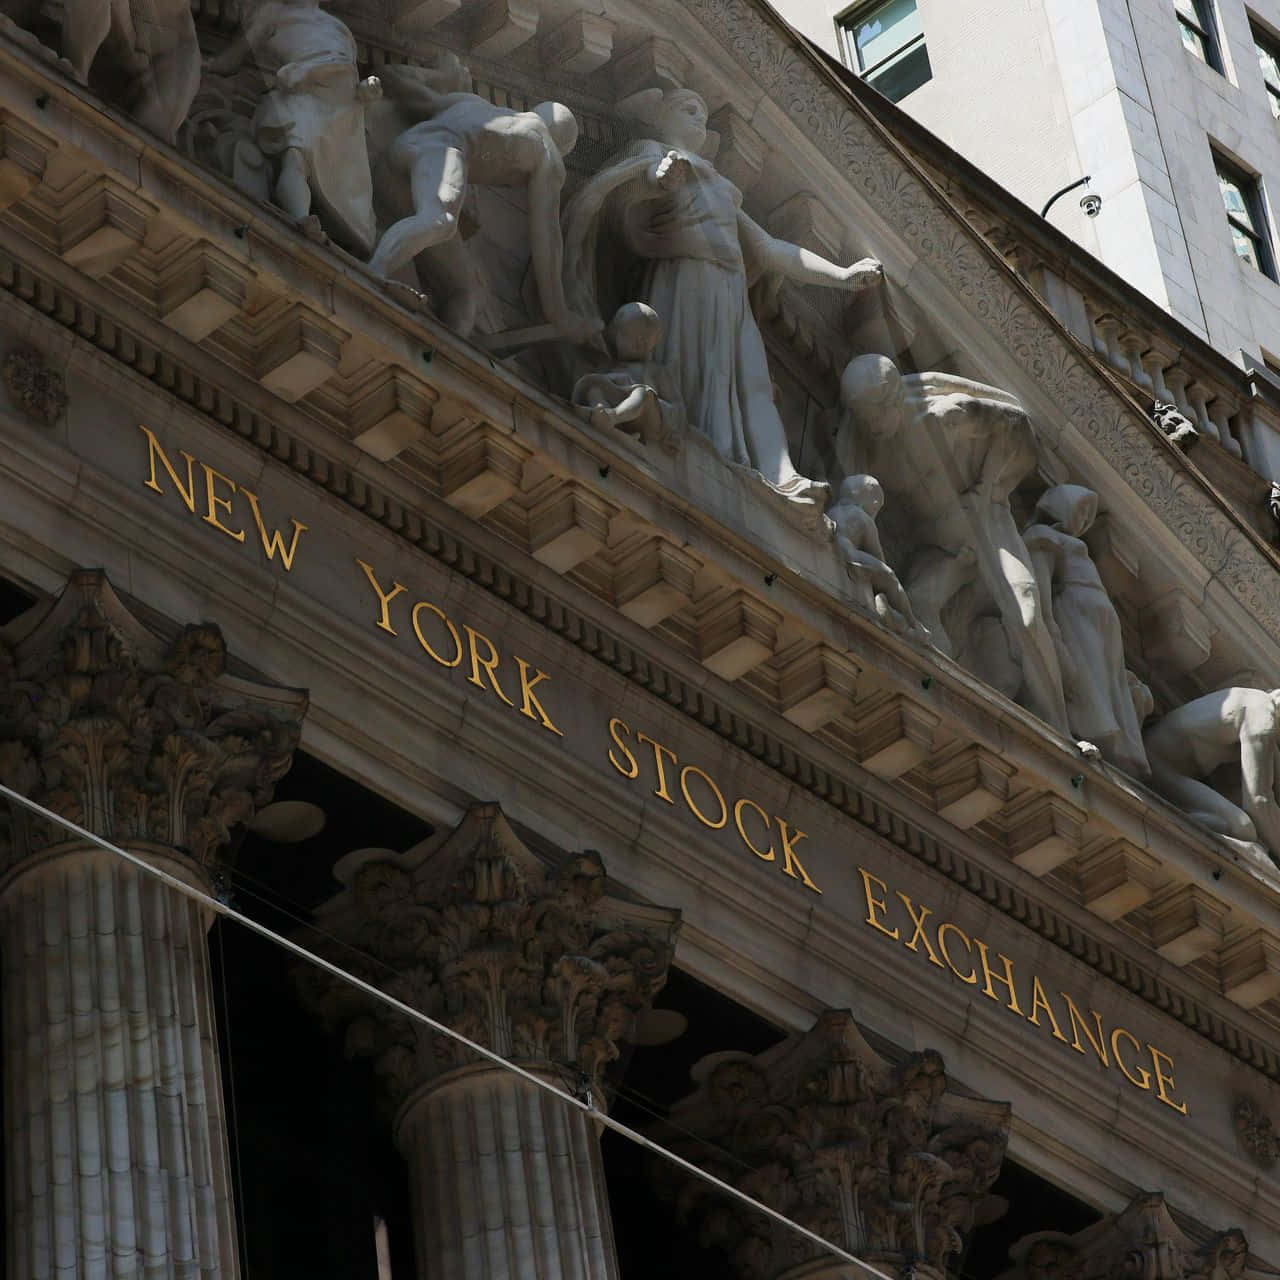 Billederaf Ny Stock Exchange